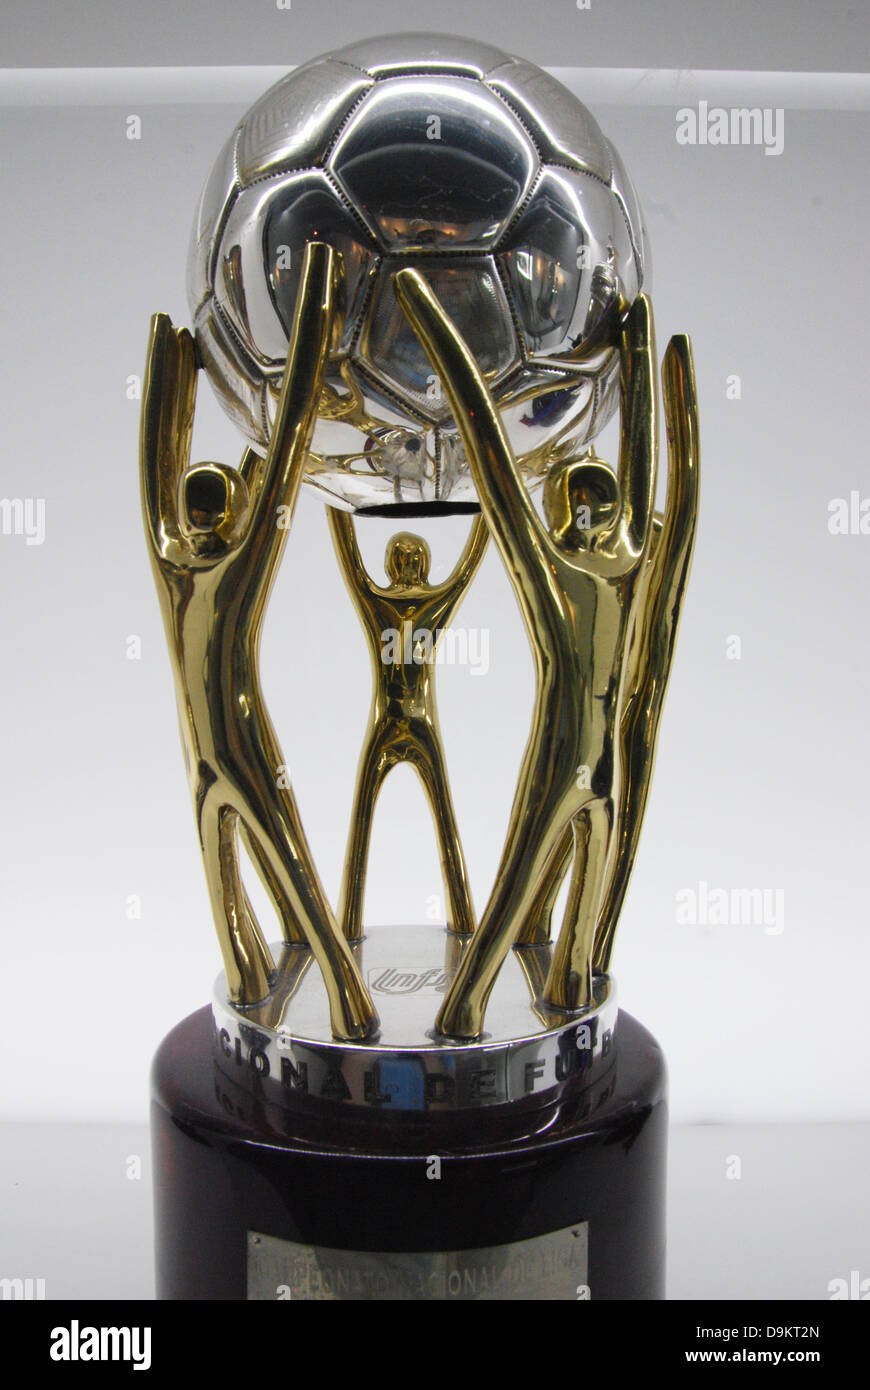 2010-2011 Spanish Soccer League trophy Stock Photo